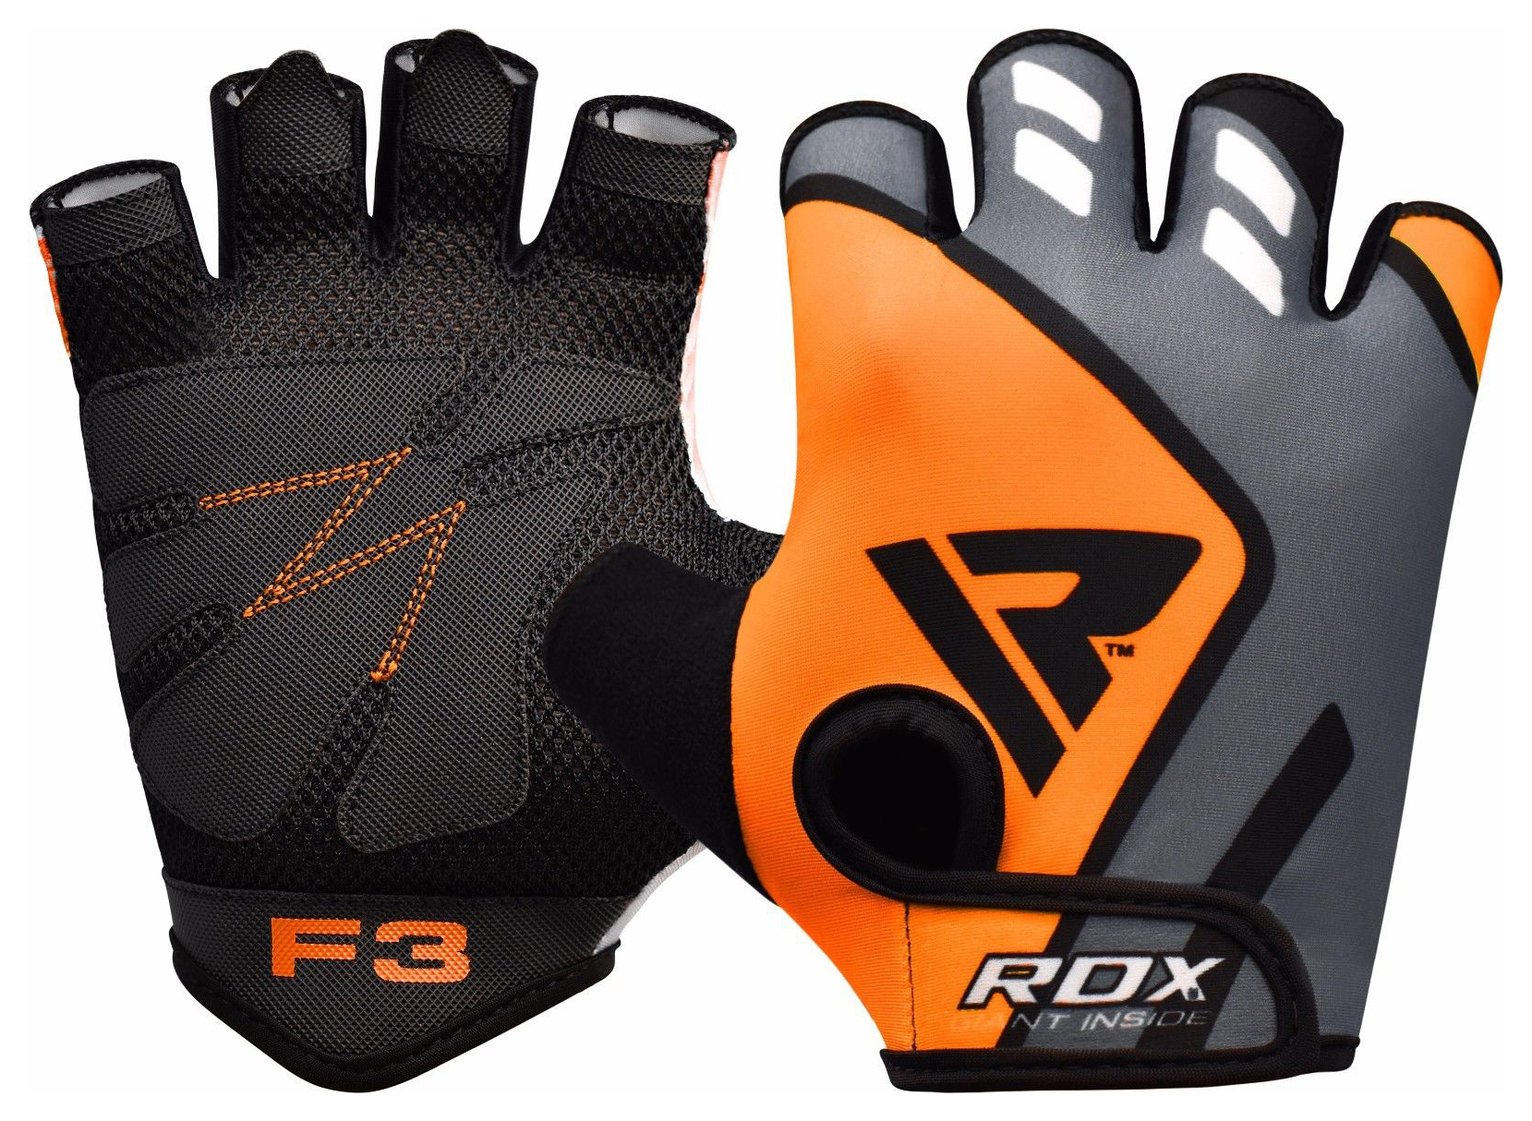 RDX Medium/Large Training Gym Gloves review